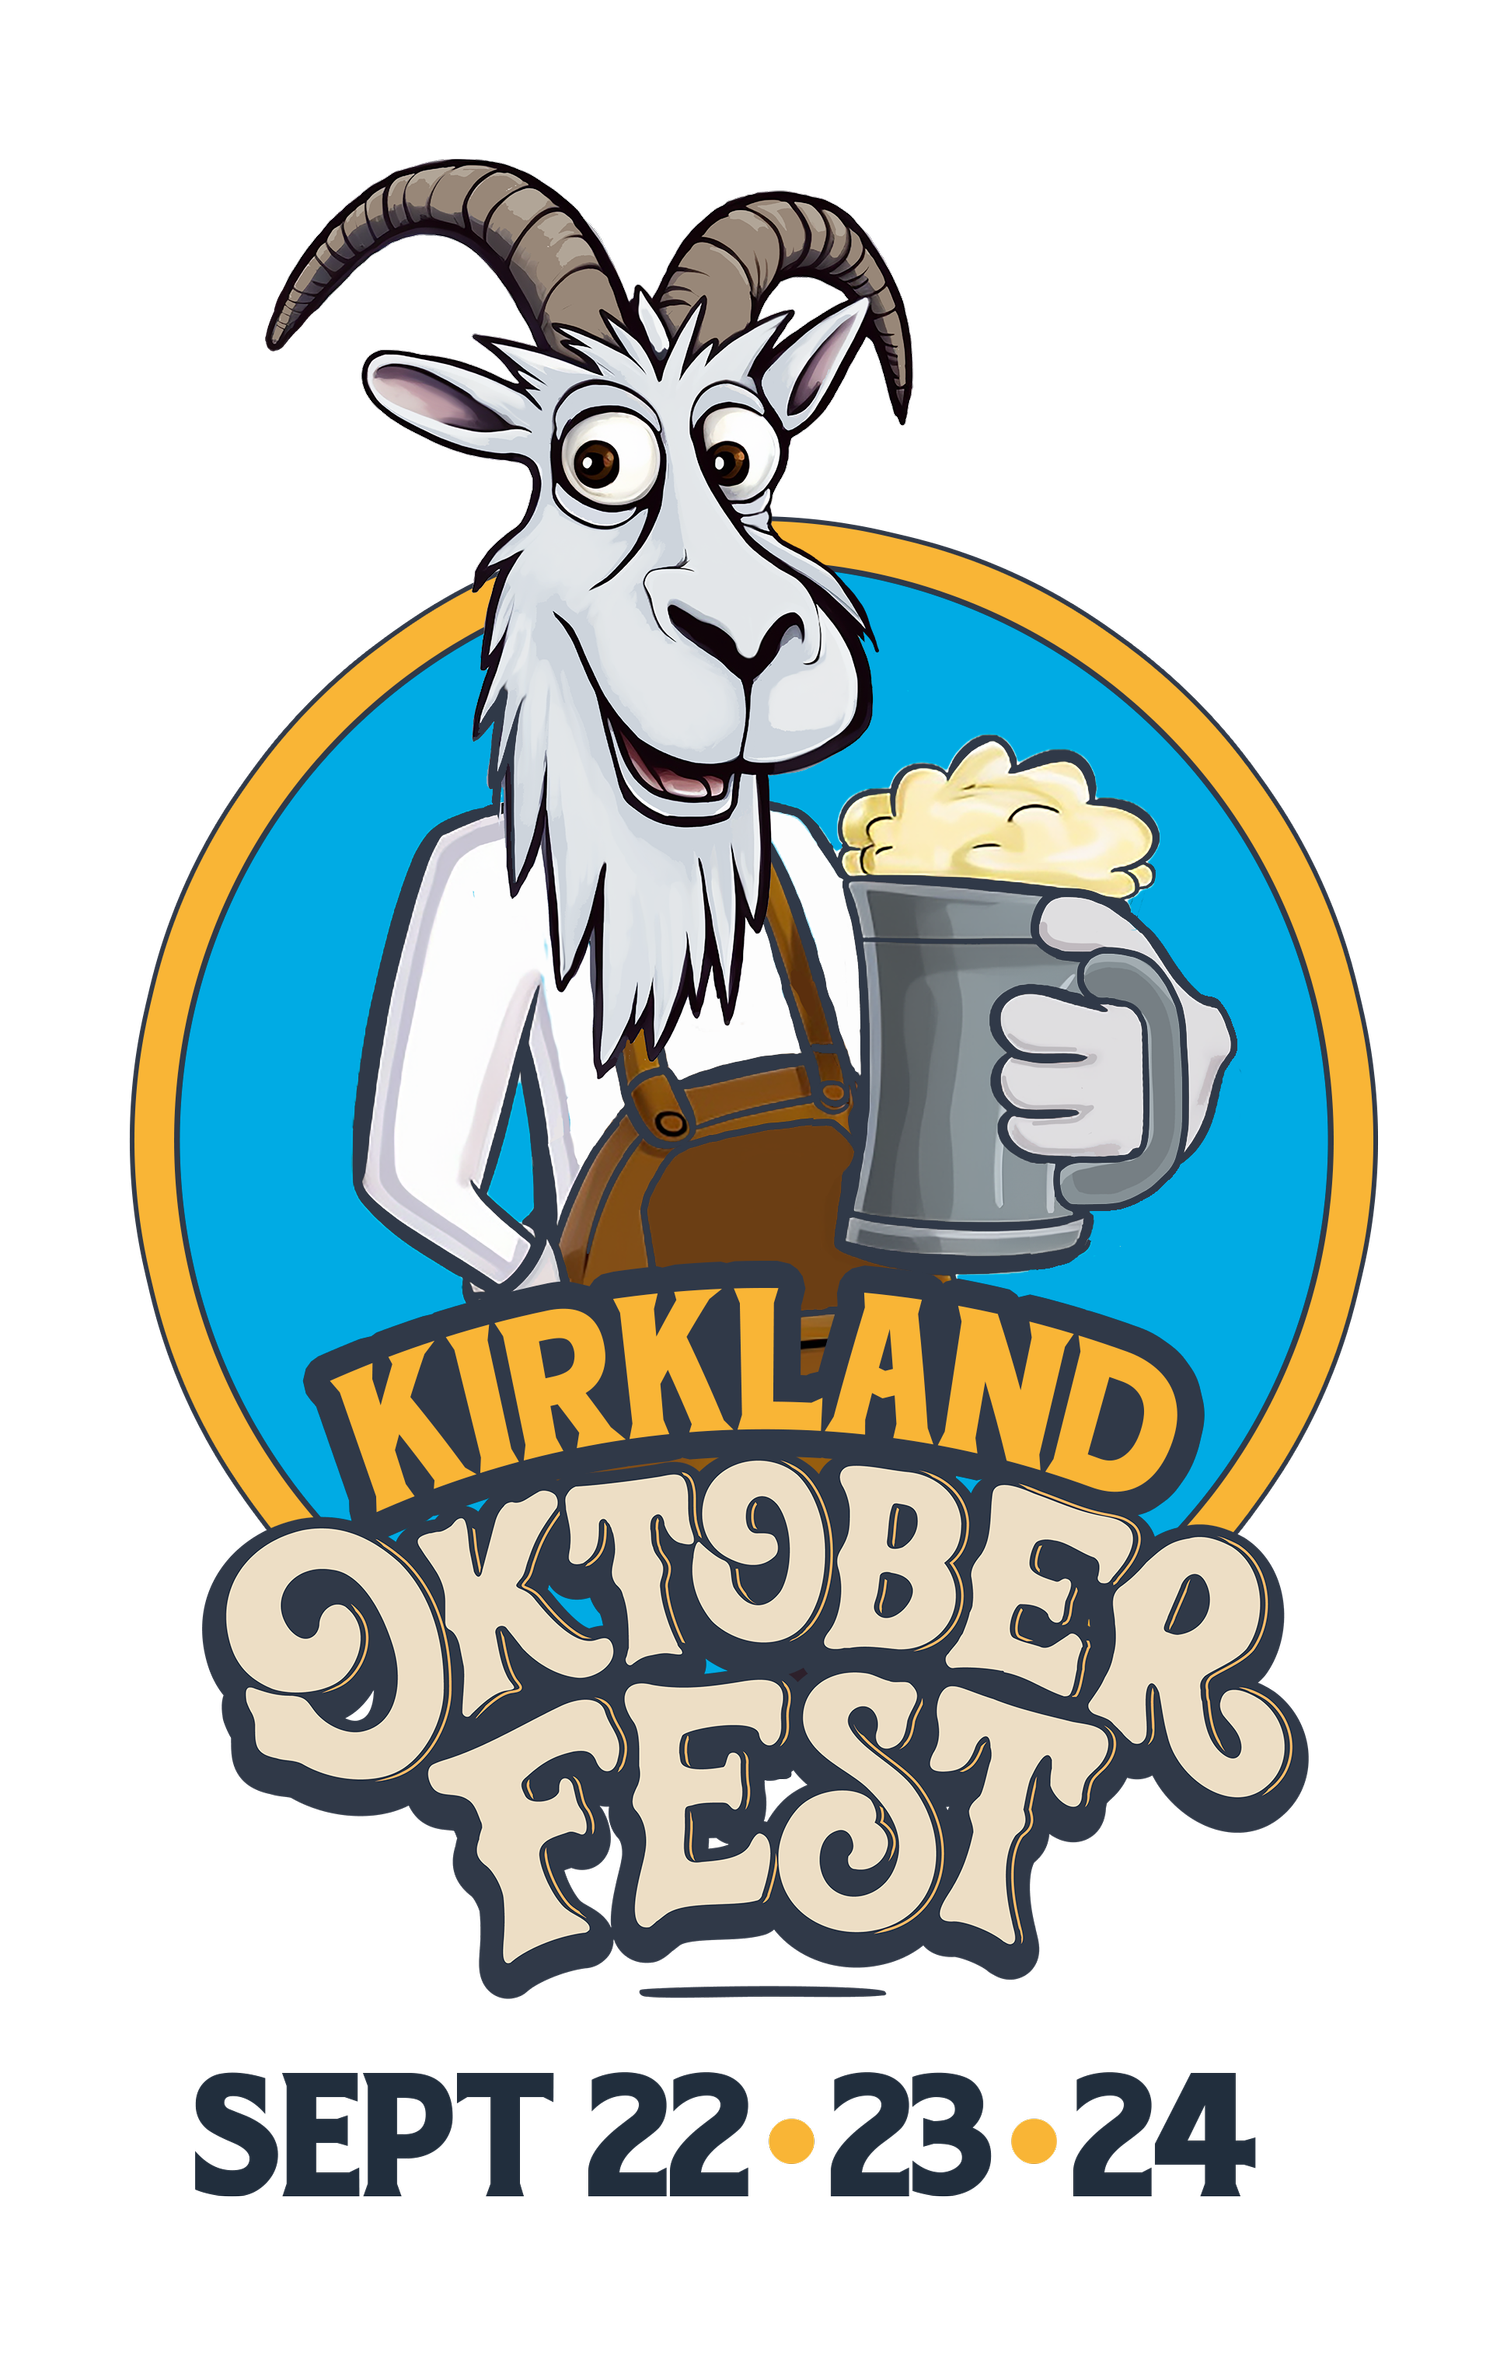 Kirkland Oktoberfest - September 22-24, 2023